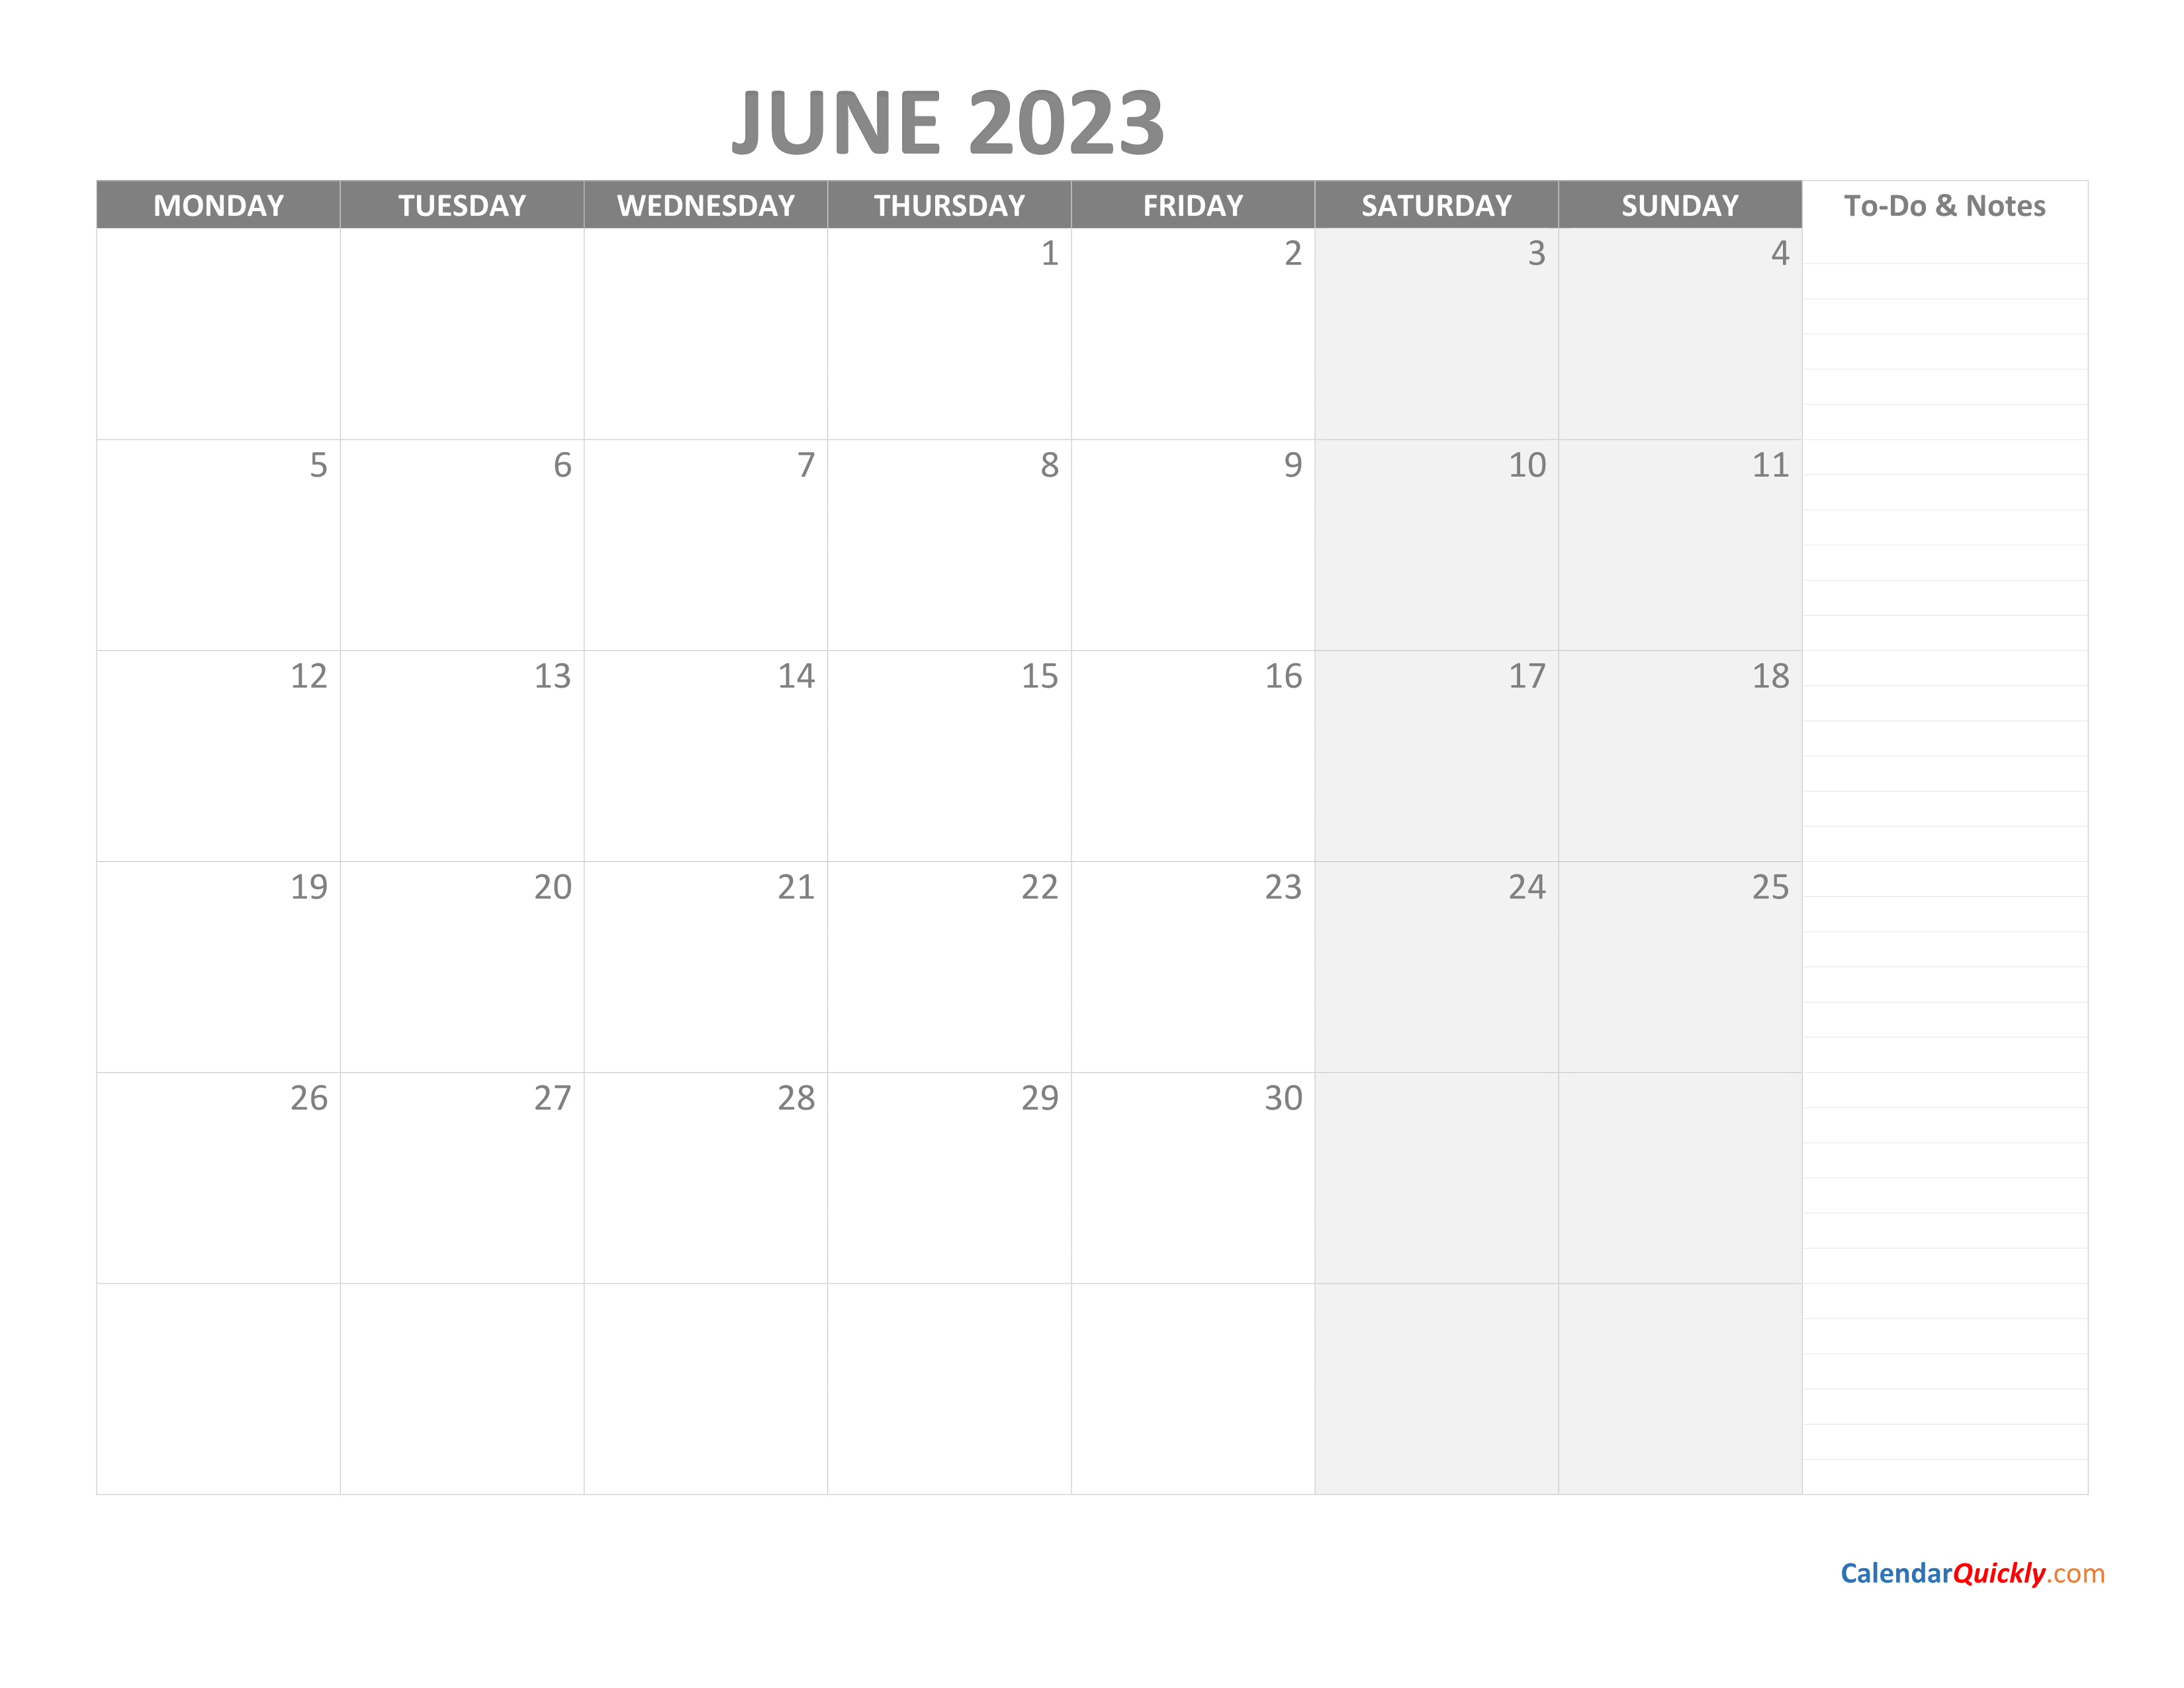 June Monday Calendar 2023 With Notes Calendar Quickly Free Hot